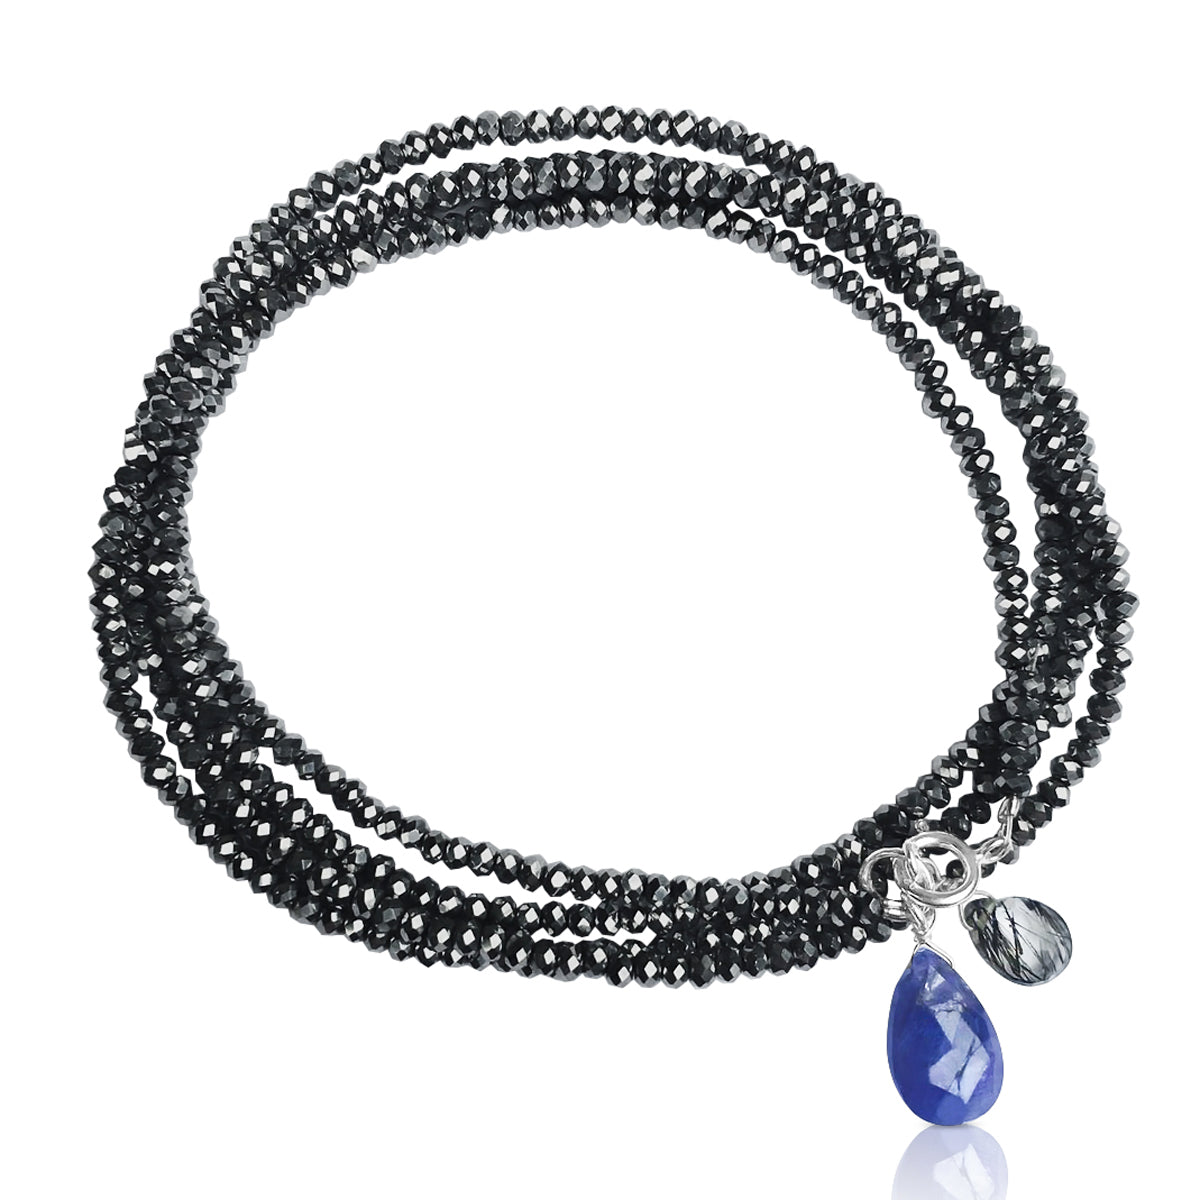 Inspirational Wrap Bracelet with Tanzanite to Celebrate Individuality